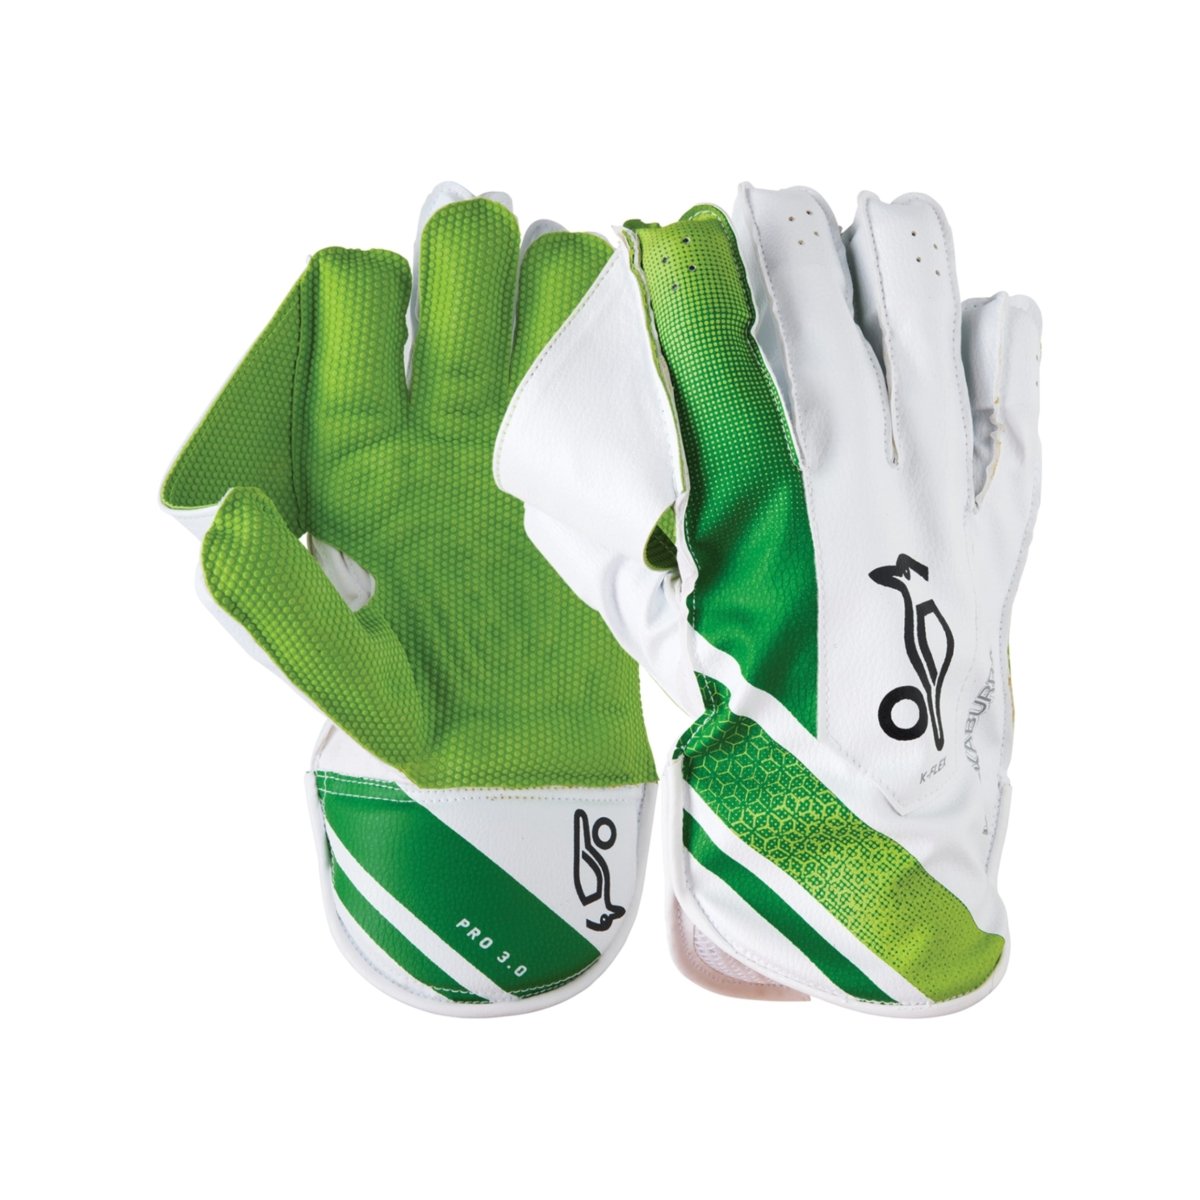 Kookaburra Kahuna Pro 3.0 Cricket Wicket Keeping Gloves